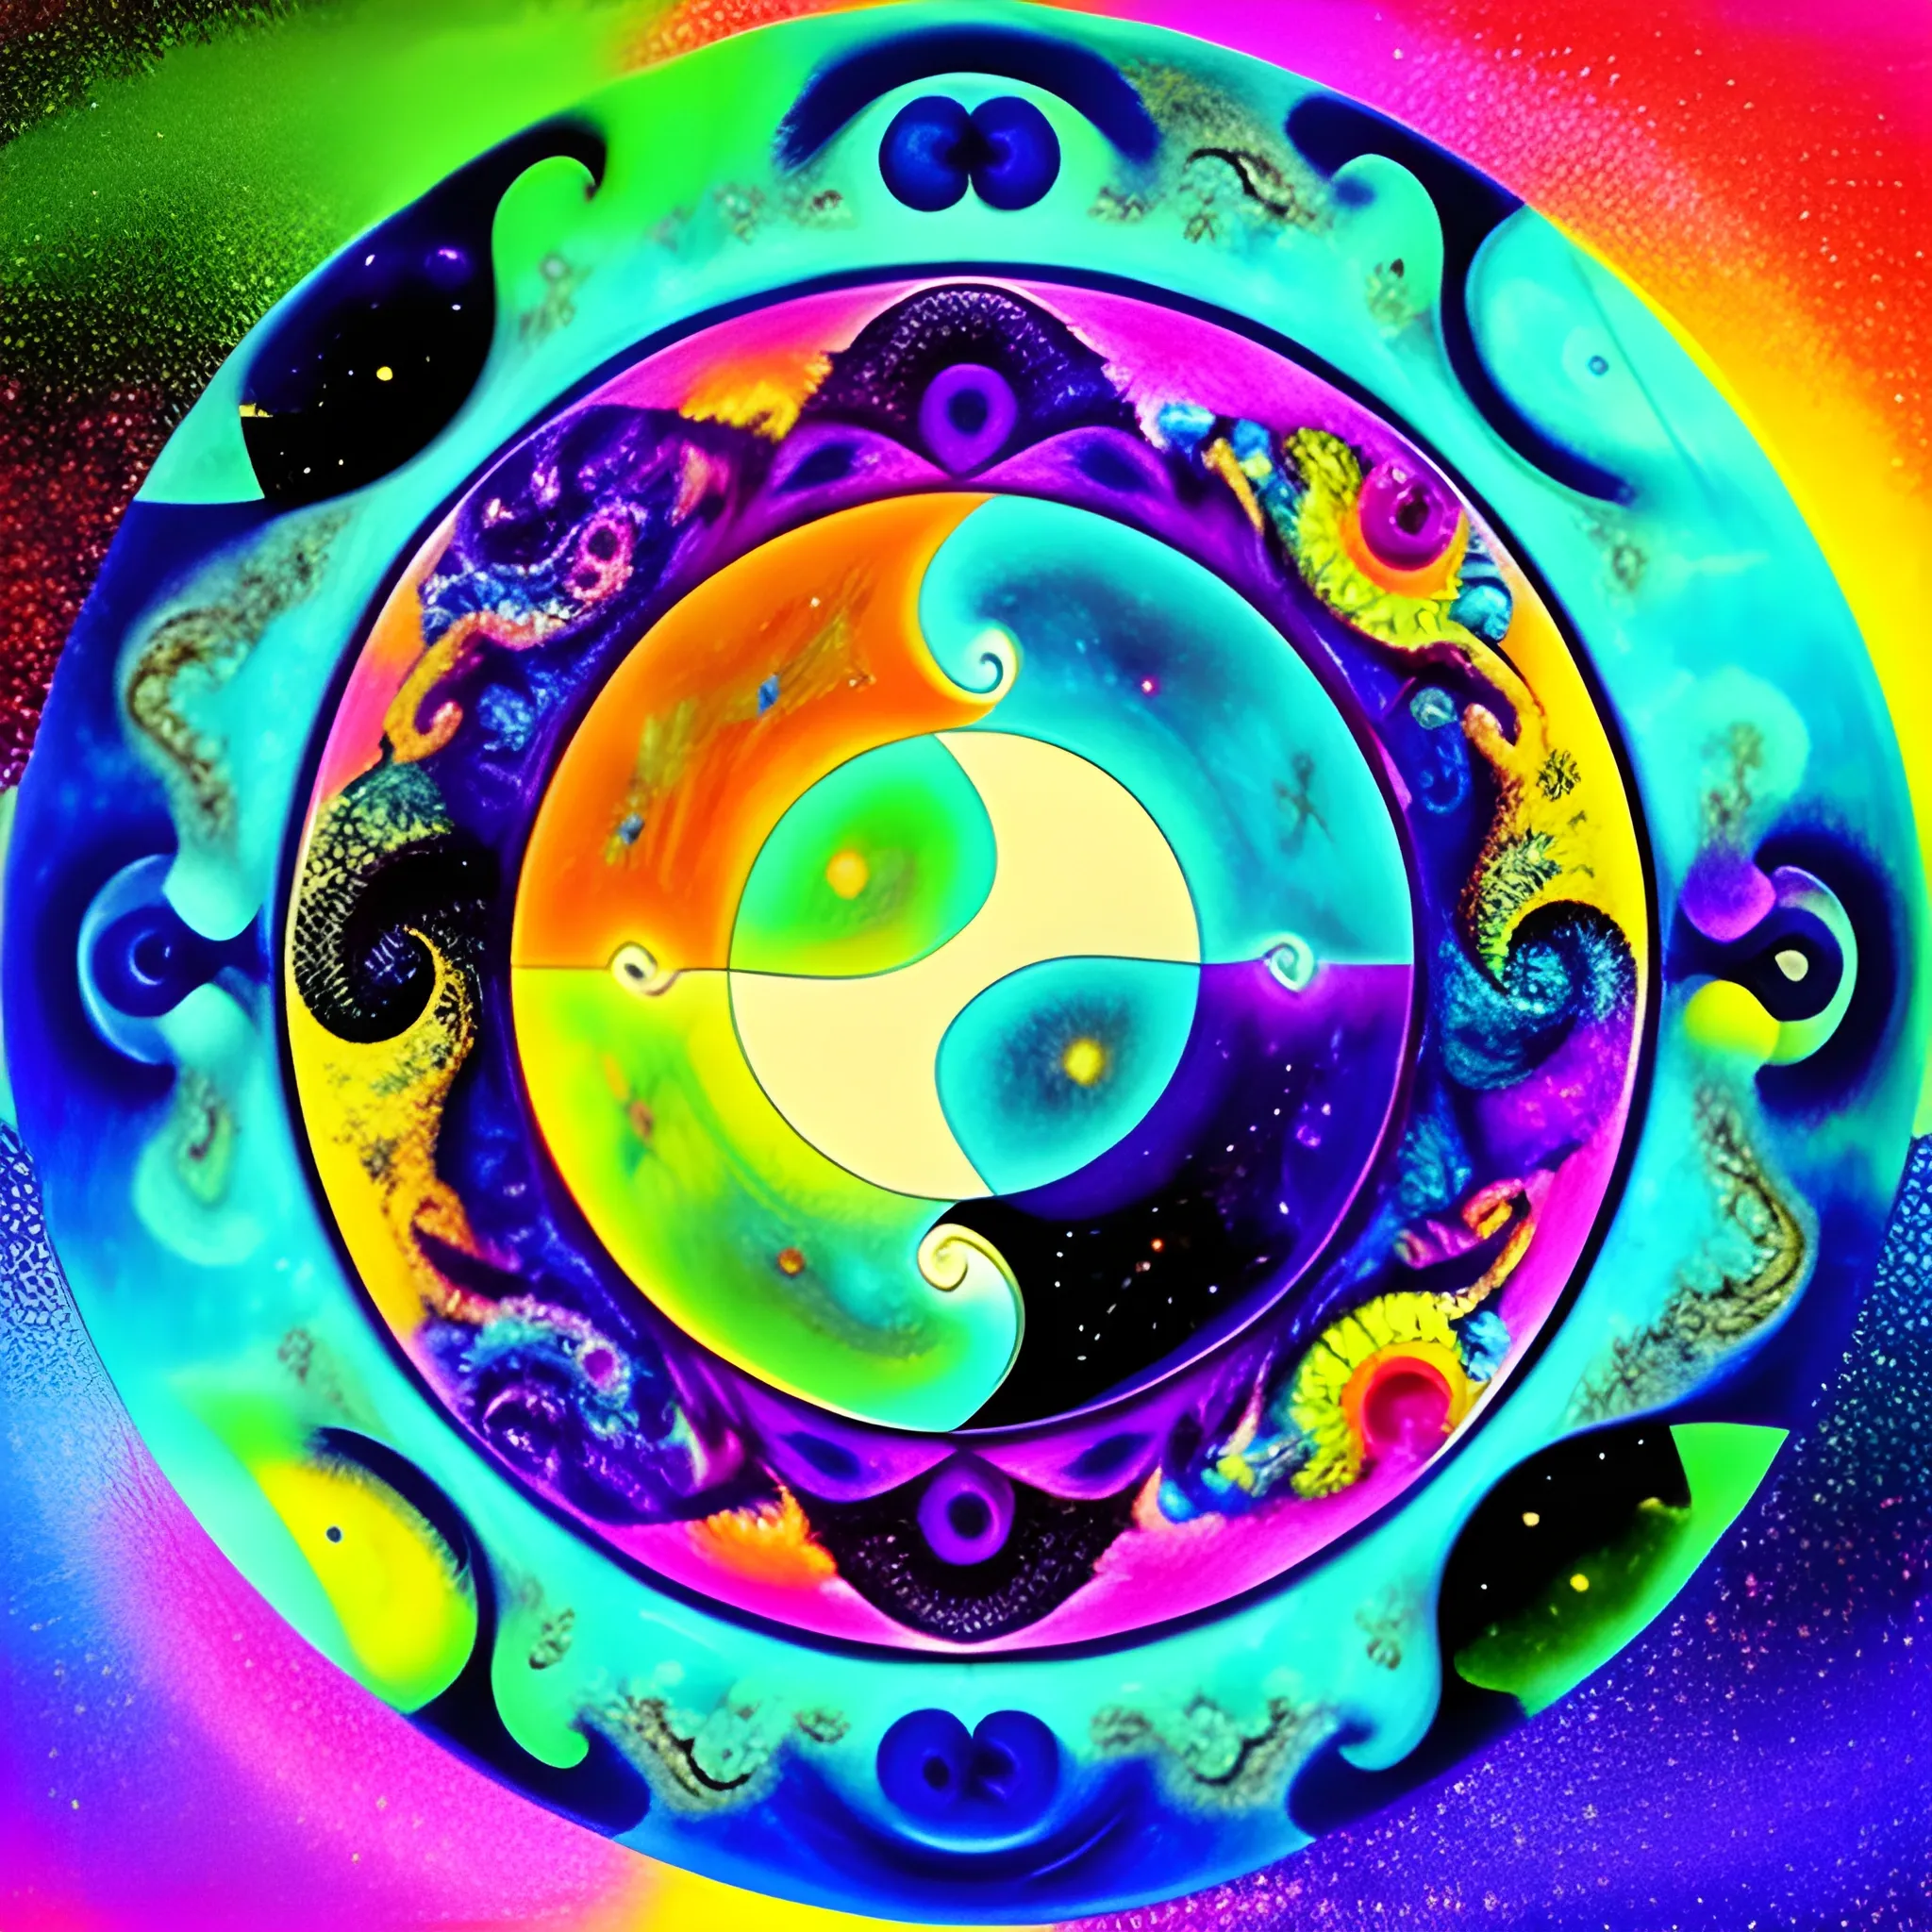 Trippy, eden, yin, yang
, colorful, universe
